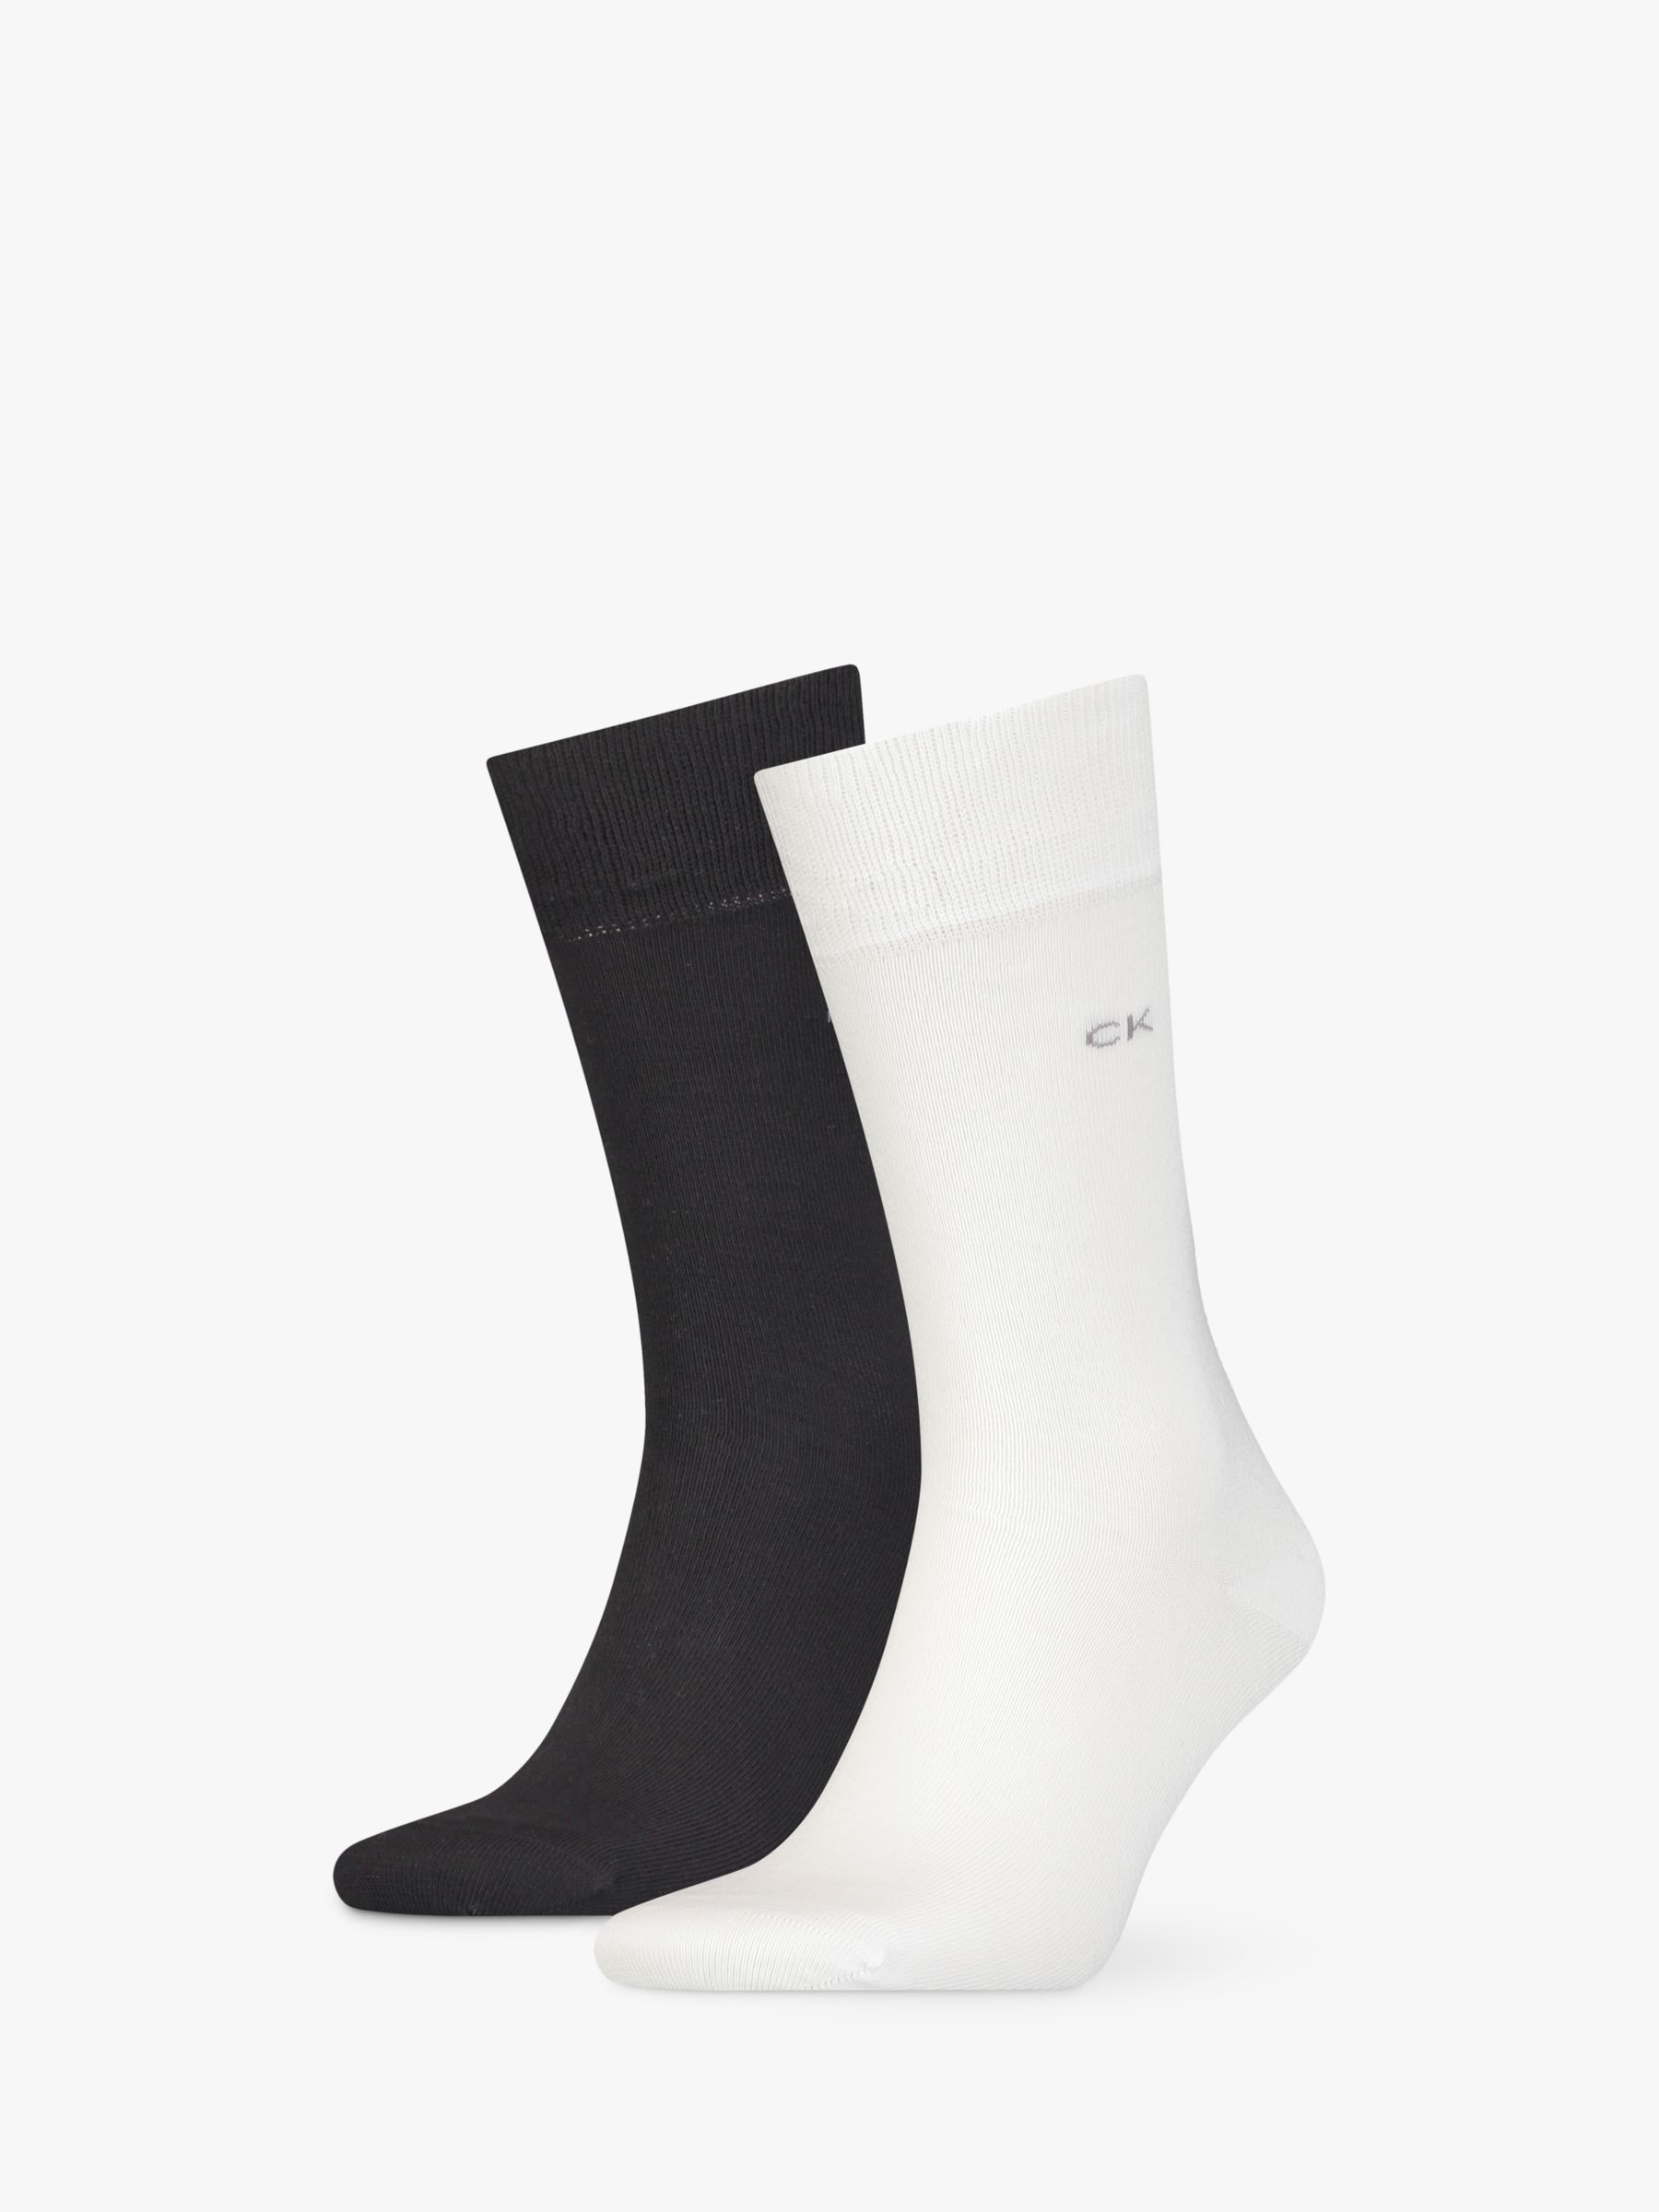 Calvin Klein Flat Knit Cotton Socks, Pack of 2, Black/White, S-M